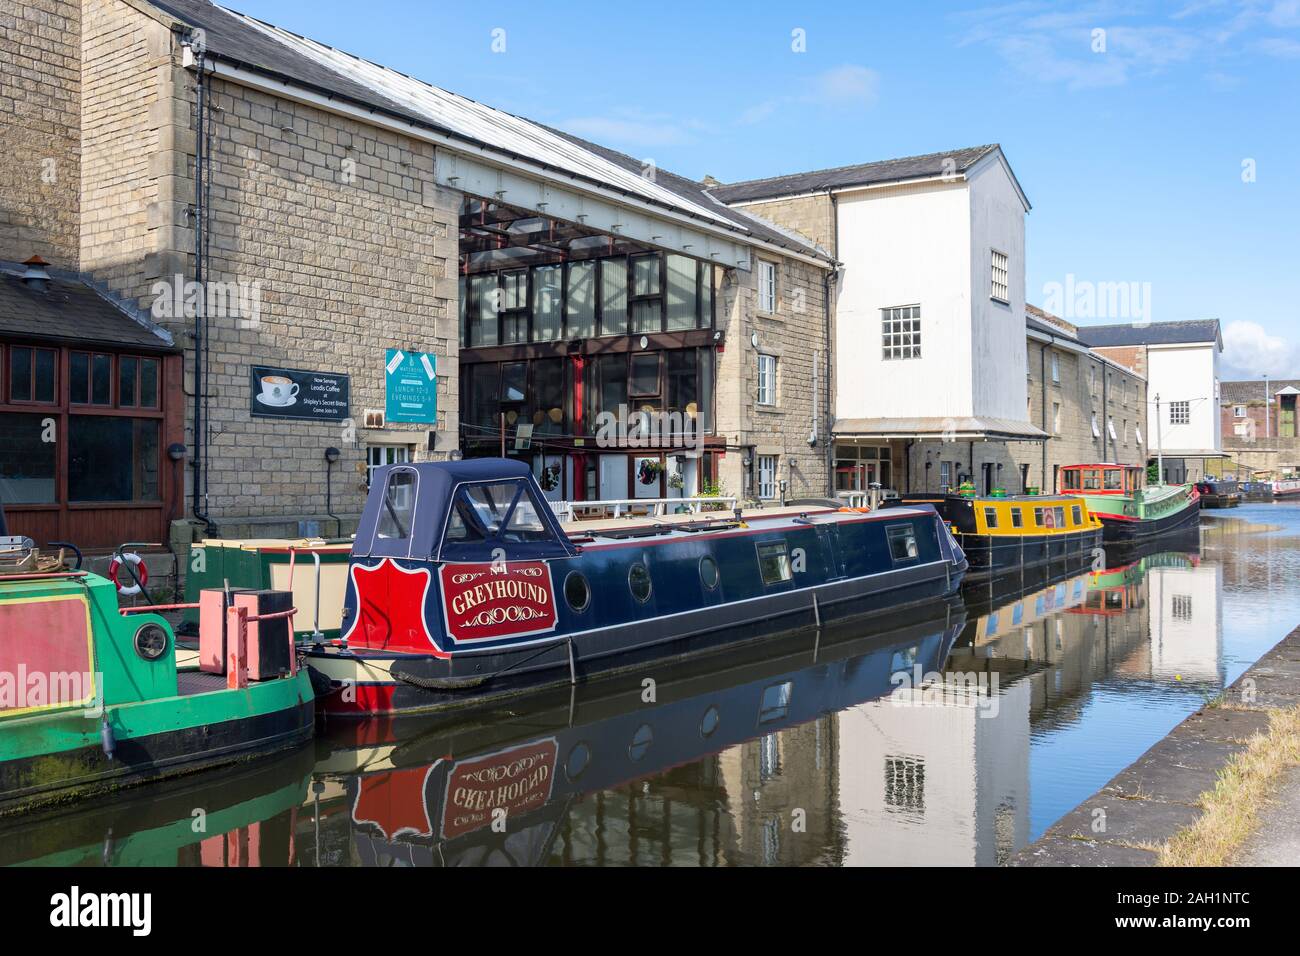 Canal boats alongside former wool warehouses, Shipley Canal, Shipley, City of Bradley, West Yorkshire, England, United Kingdom Stock Photo